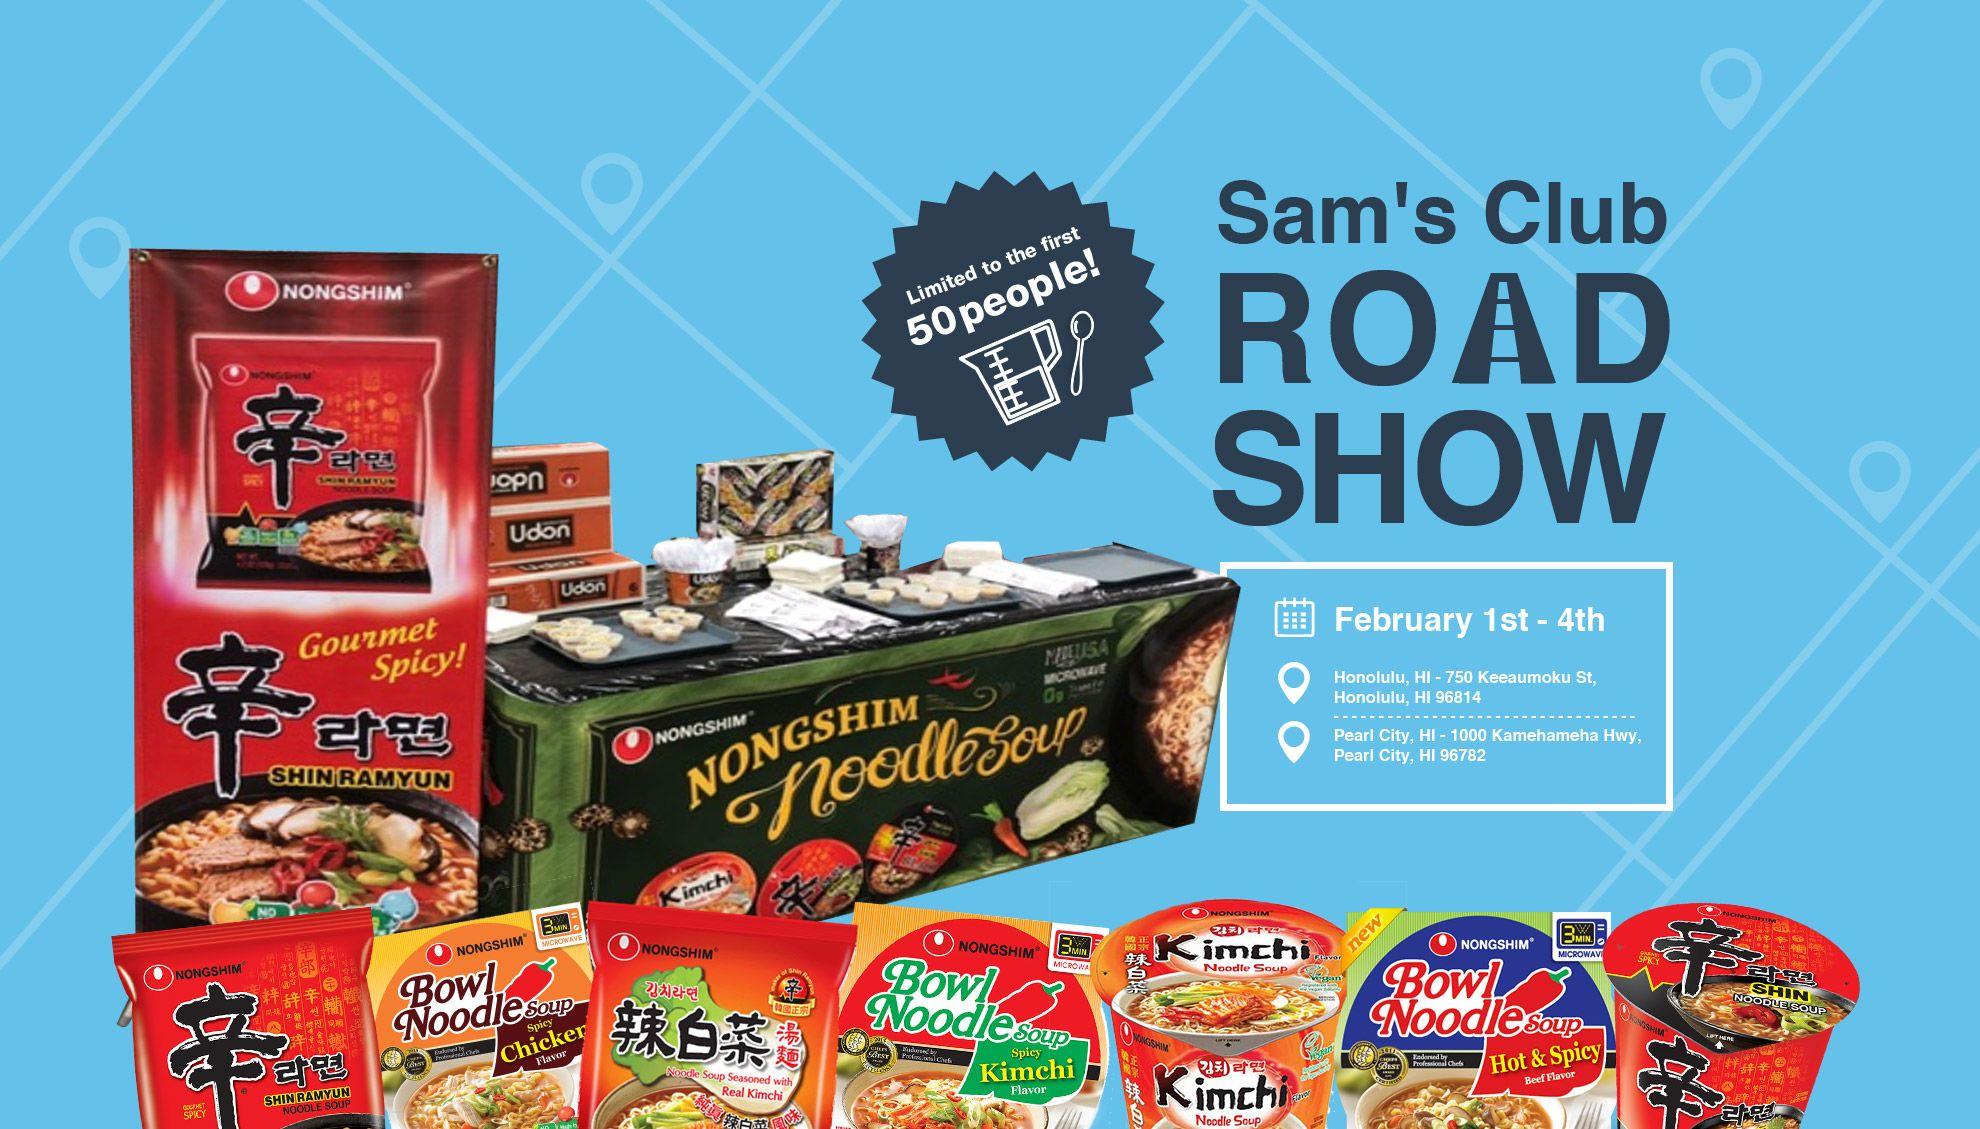 Sam's Club Food Logo - Sam's Club RoadShow | Nongshim USA